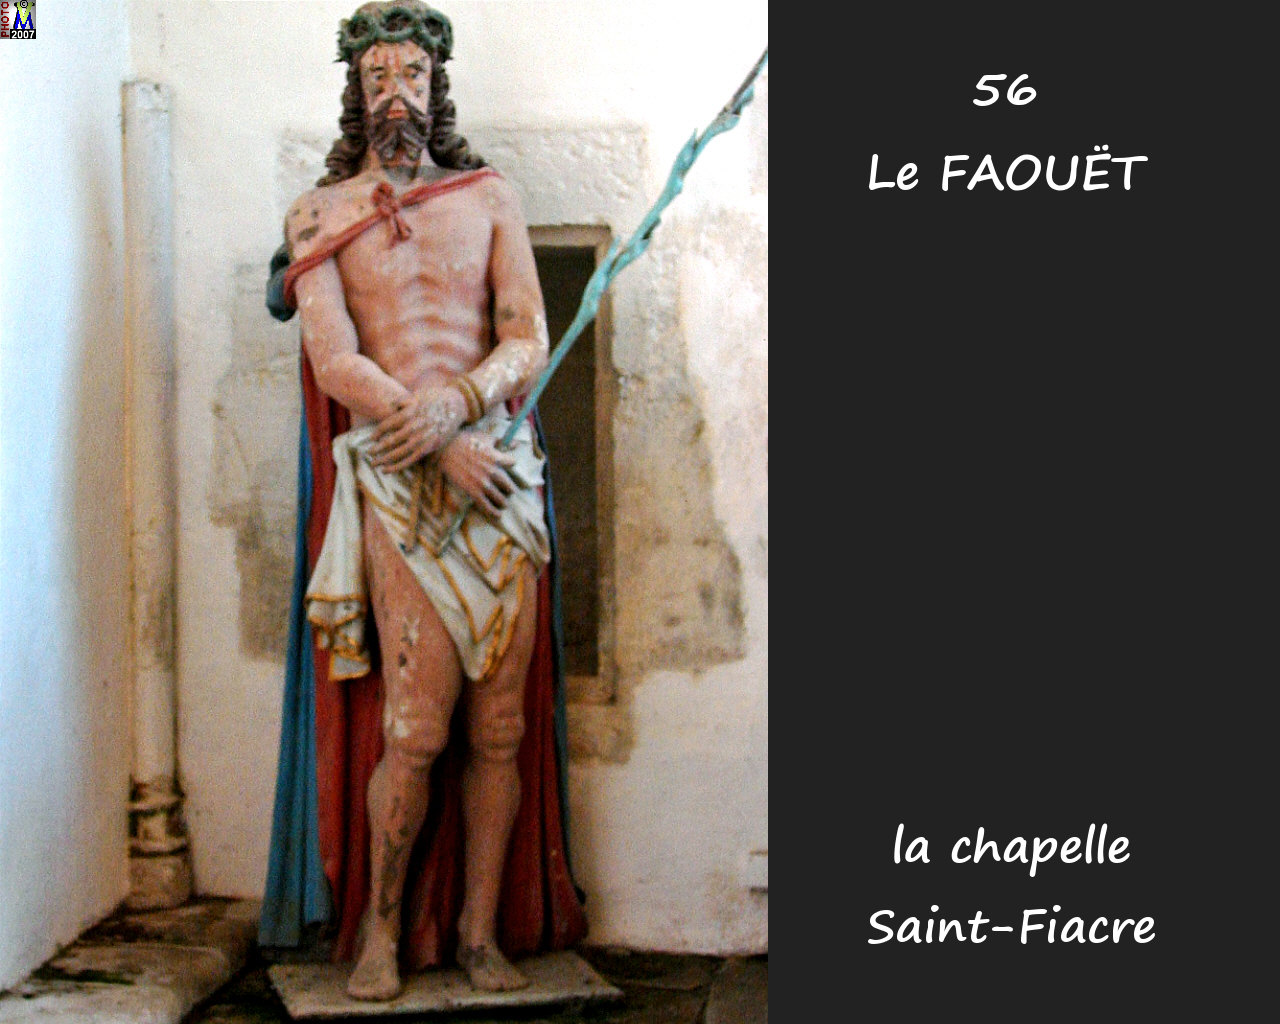 56FAOUET_chapelle-fiacre_330.jpg